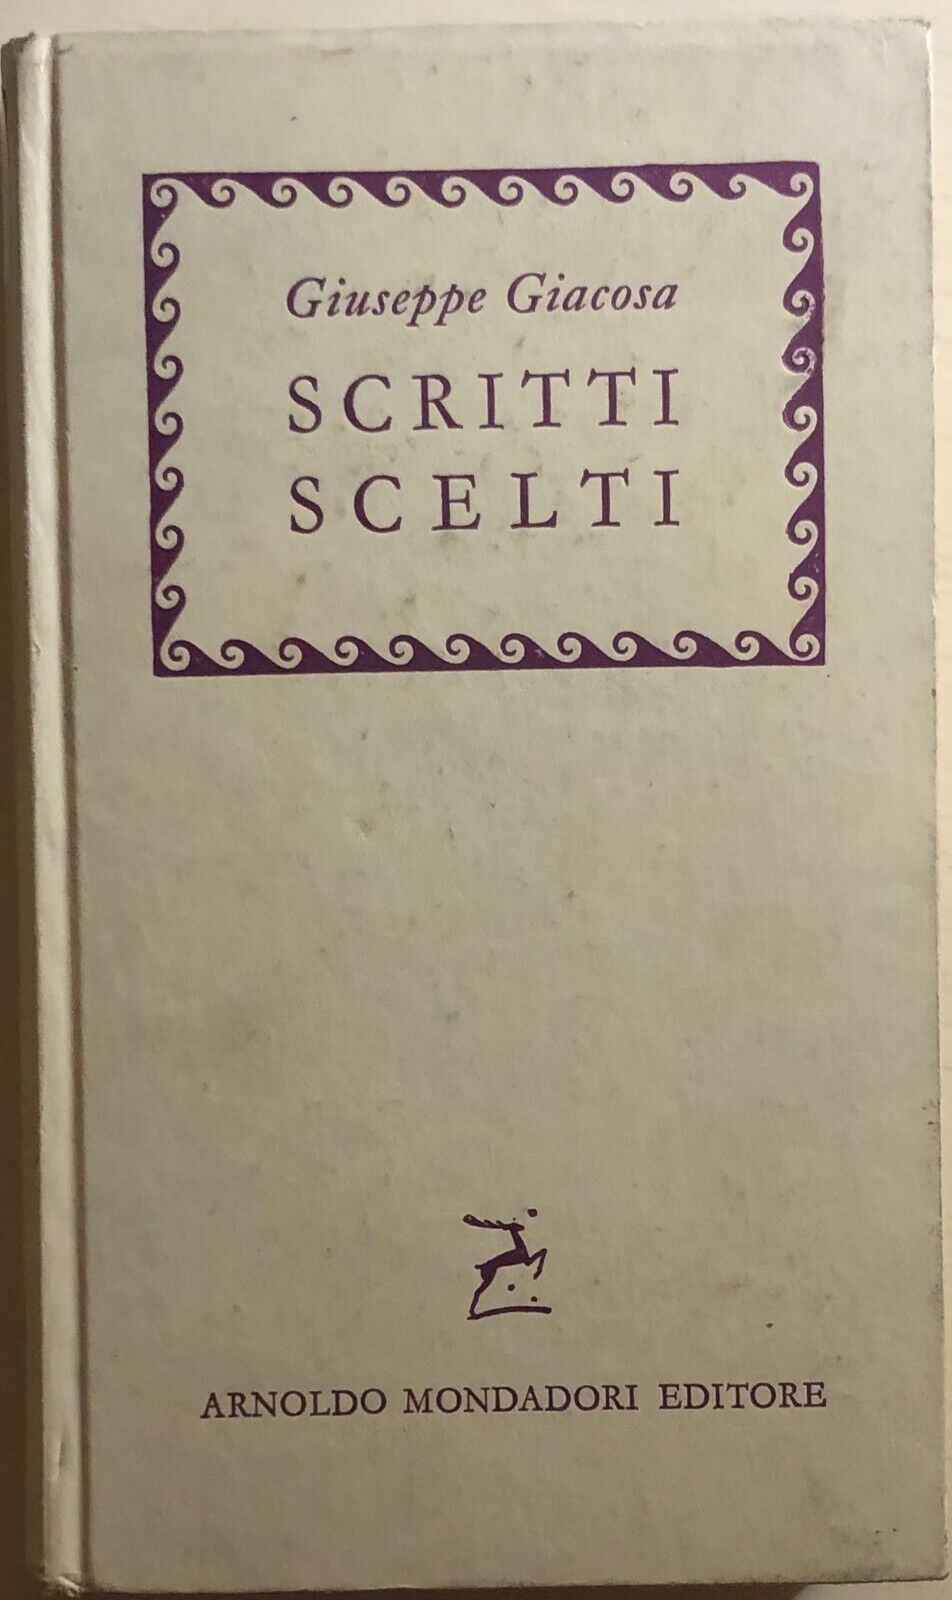 Scritti scelti di Giuseppe Giacosa, 1960, Arnoldo Mondadori Editore